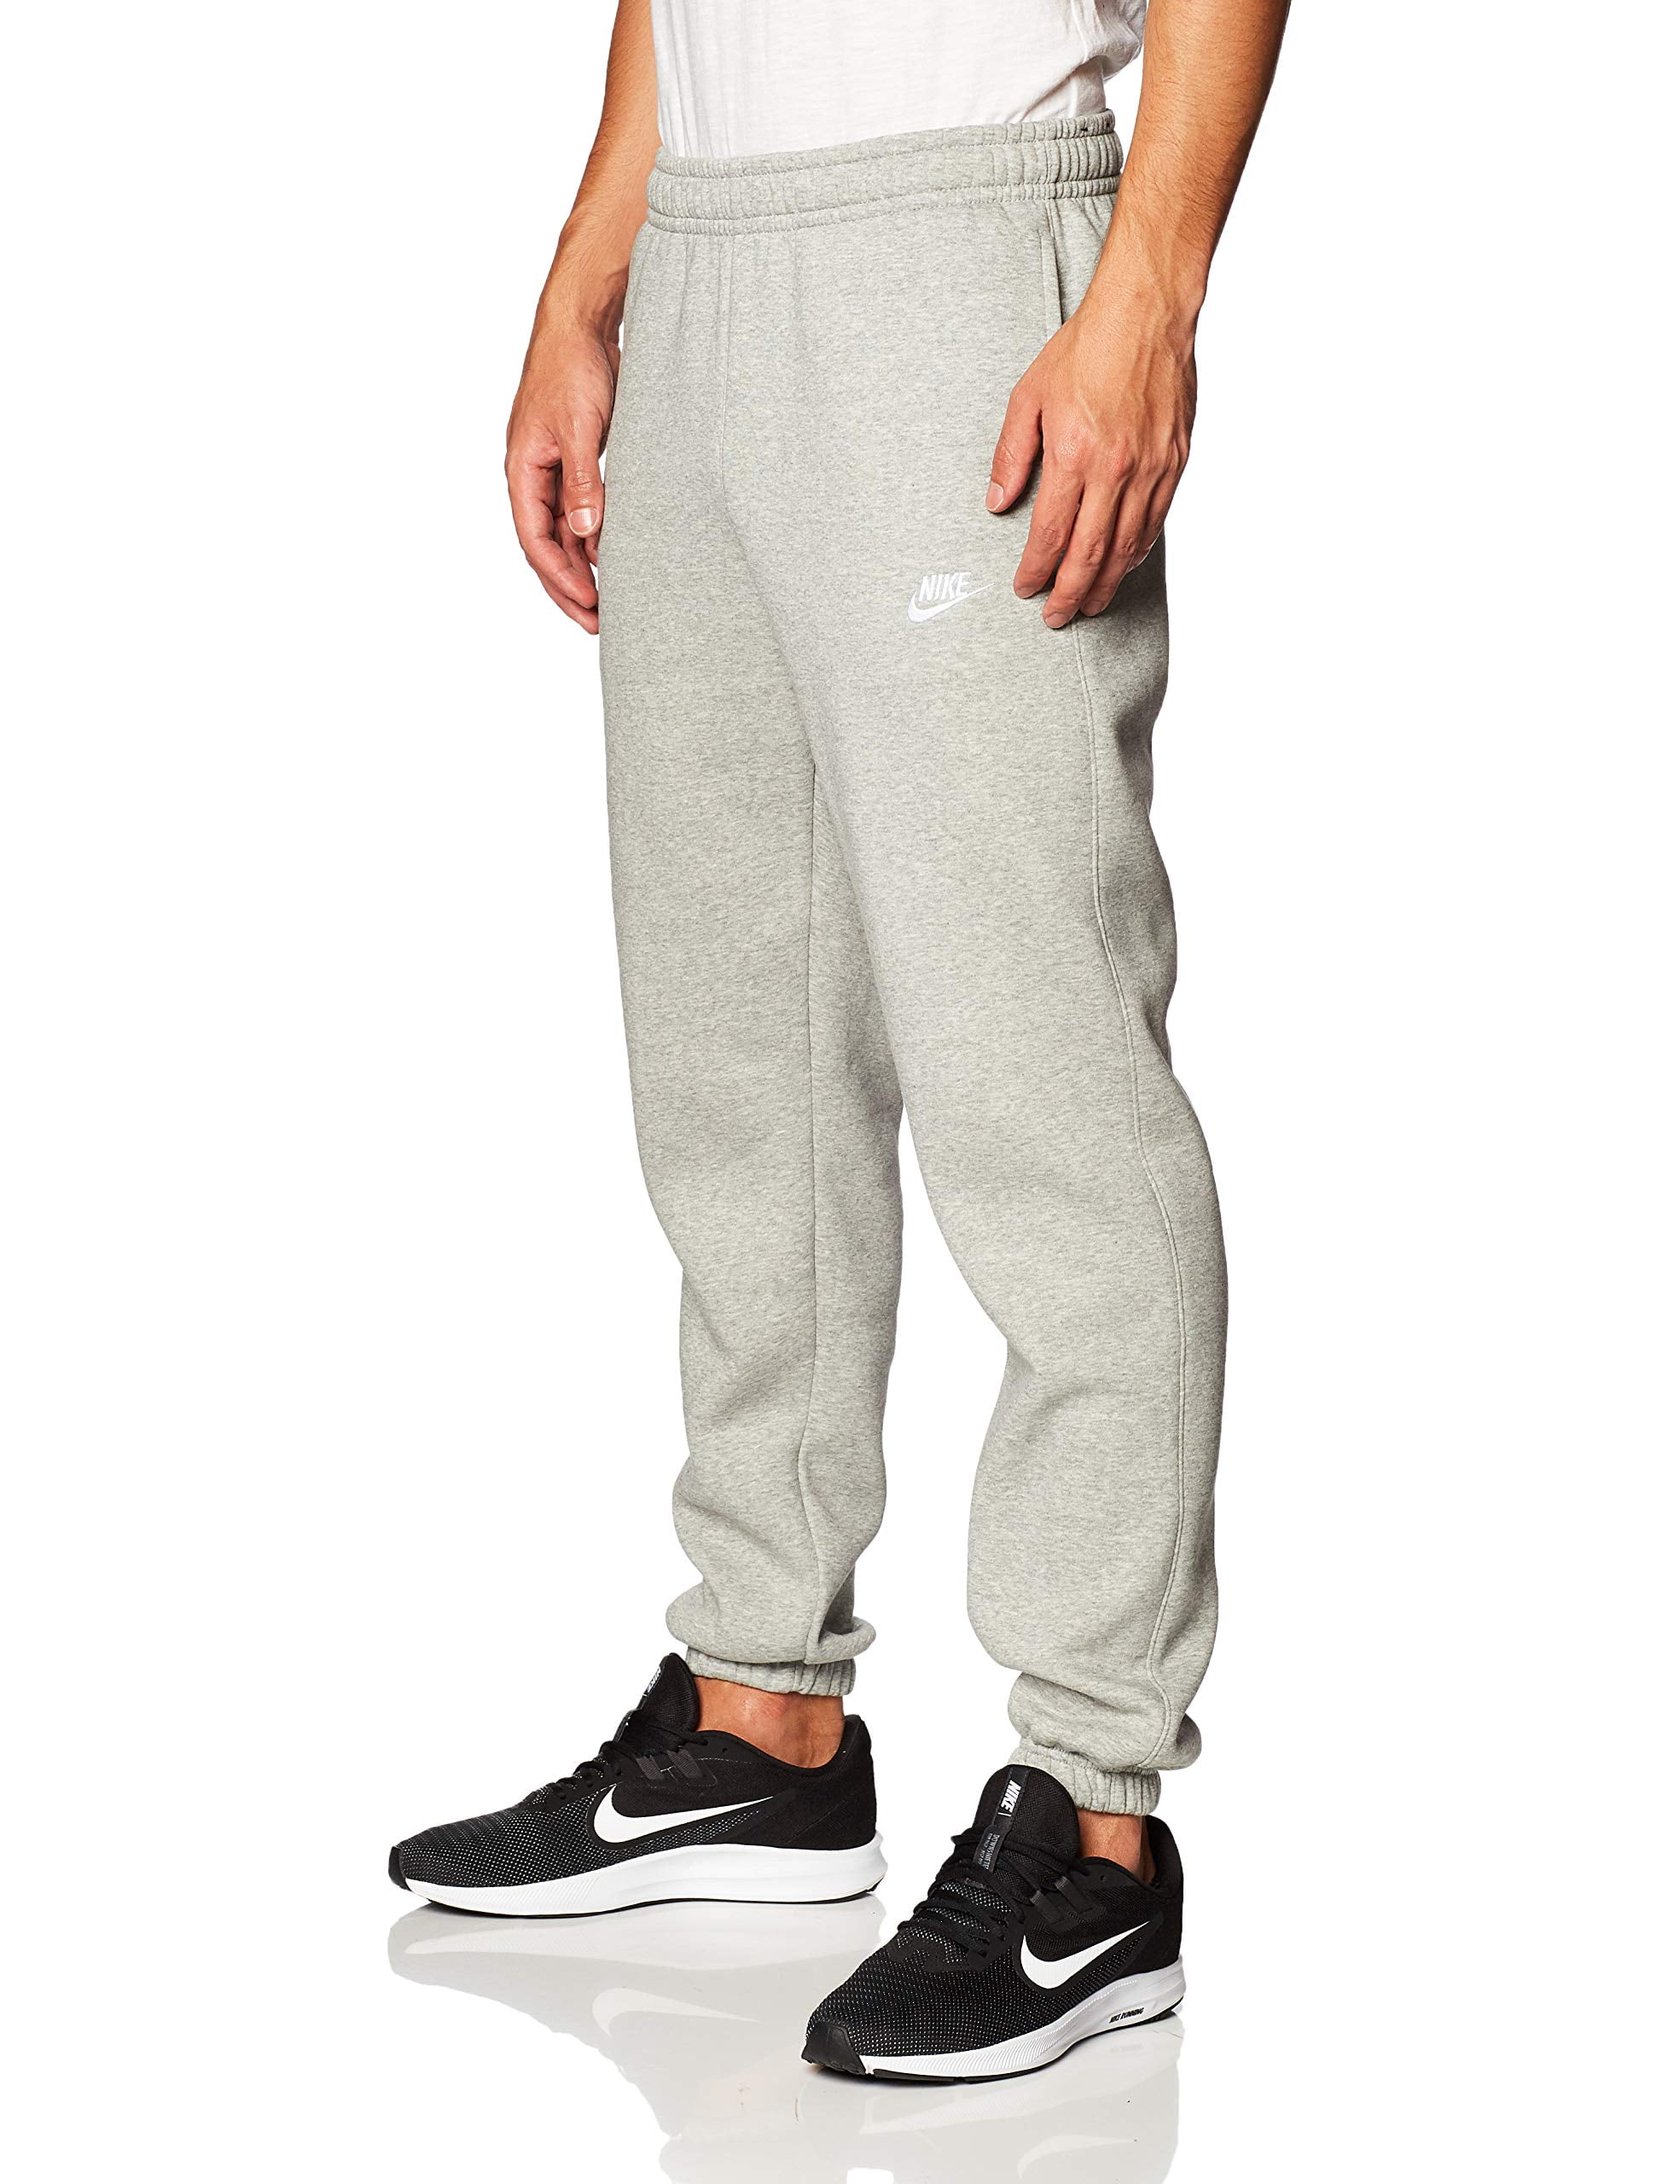 Mirar furtivamente Firmar Hacer la cama Nike Sportswear Men's Club Fleece Joggers Pants (Light Gray/JDI Patch,  XX-Large) - Walmart.com